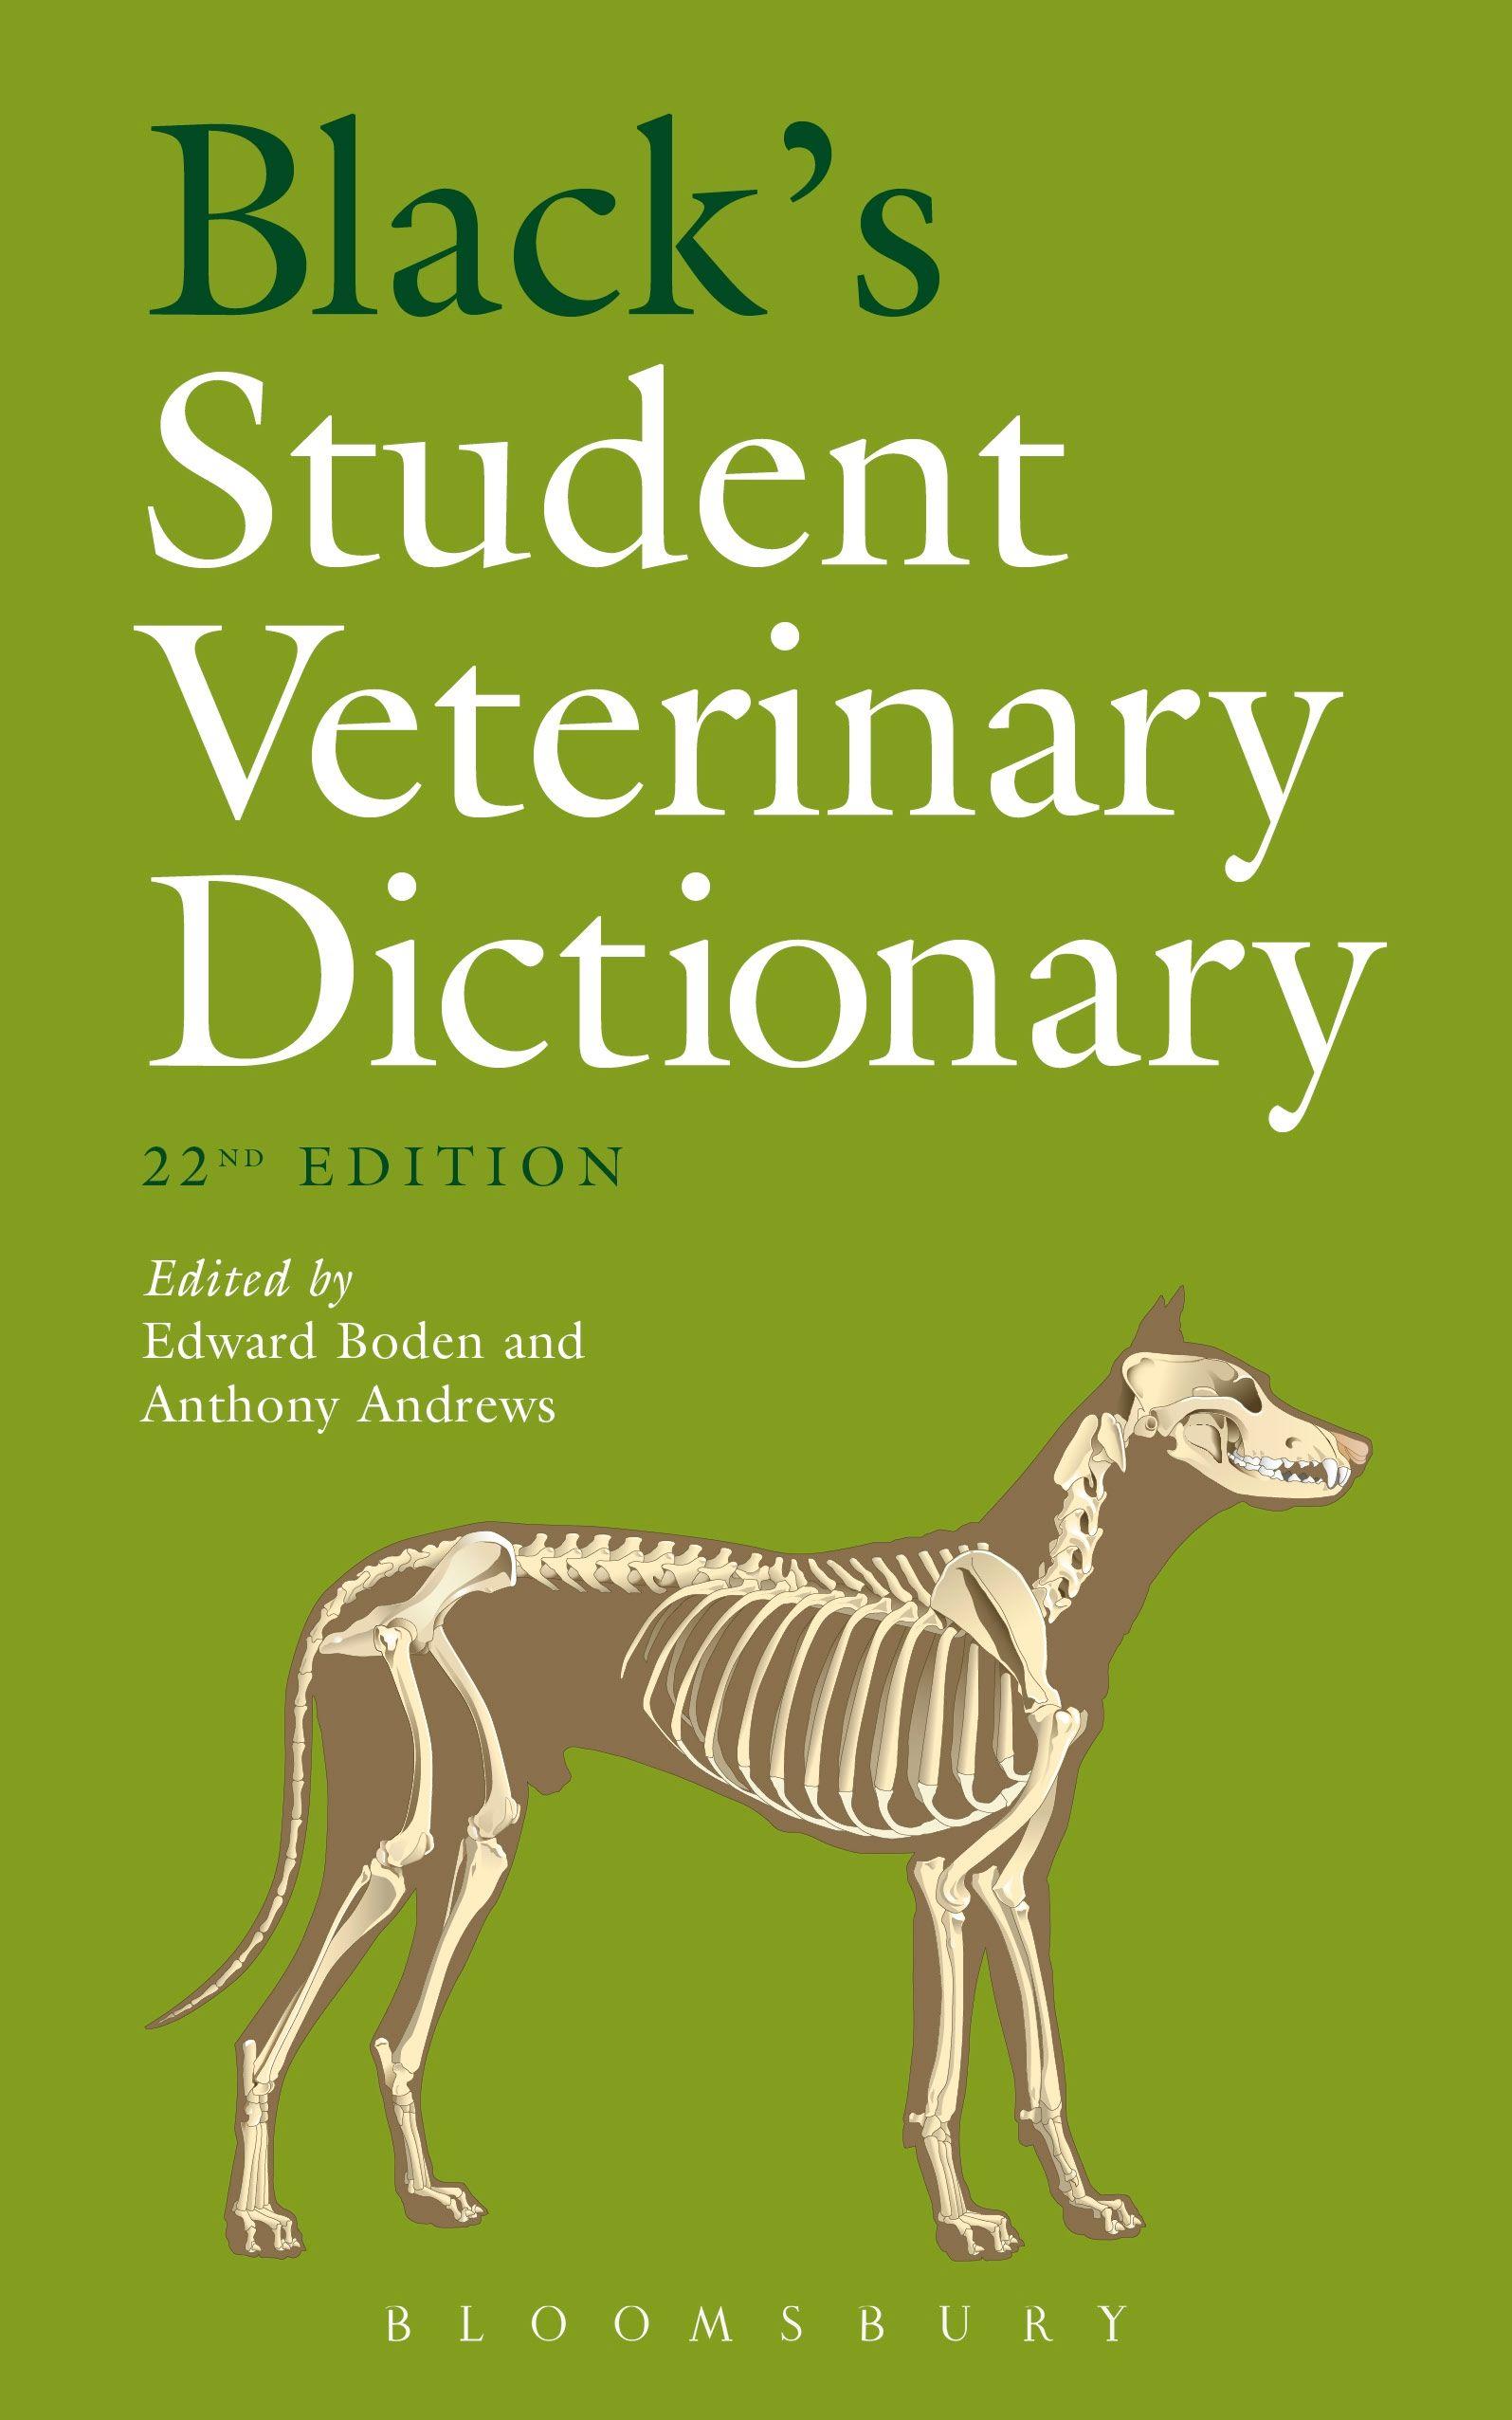 Black's Student Veterinary Dictionary / Taschenbuch / Kartoniert / Broschiert / Englisch / 2016 / Bloomsbury Information / EAN 9781472932020